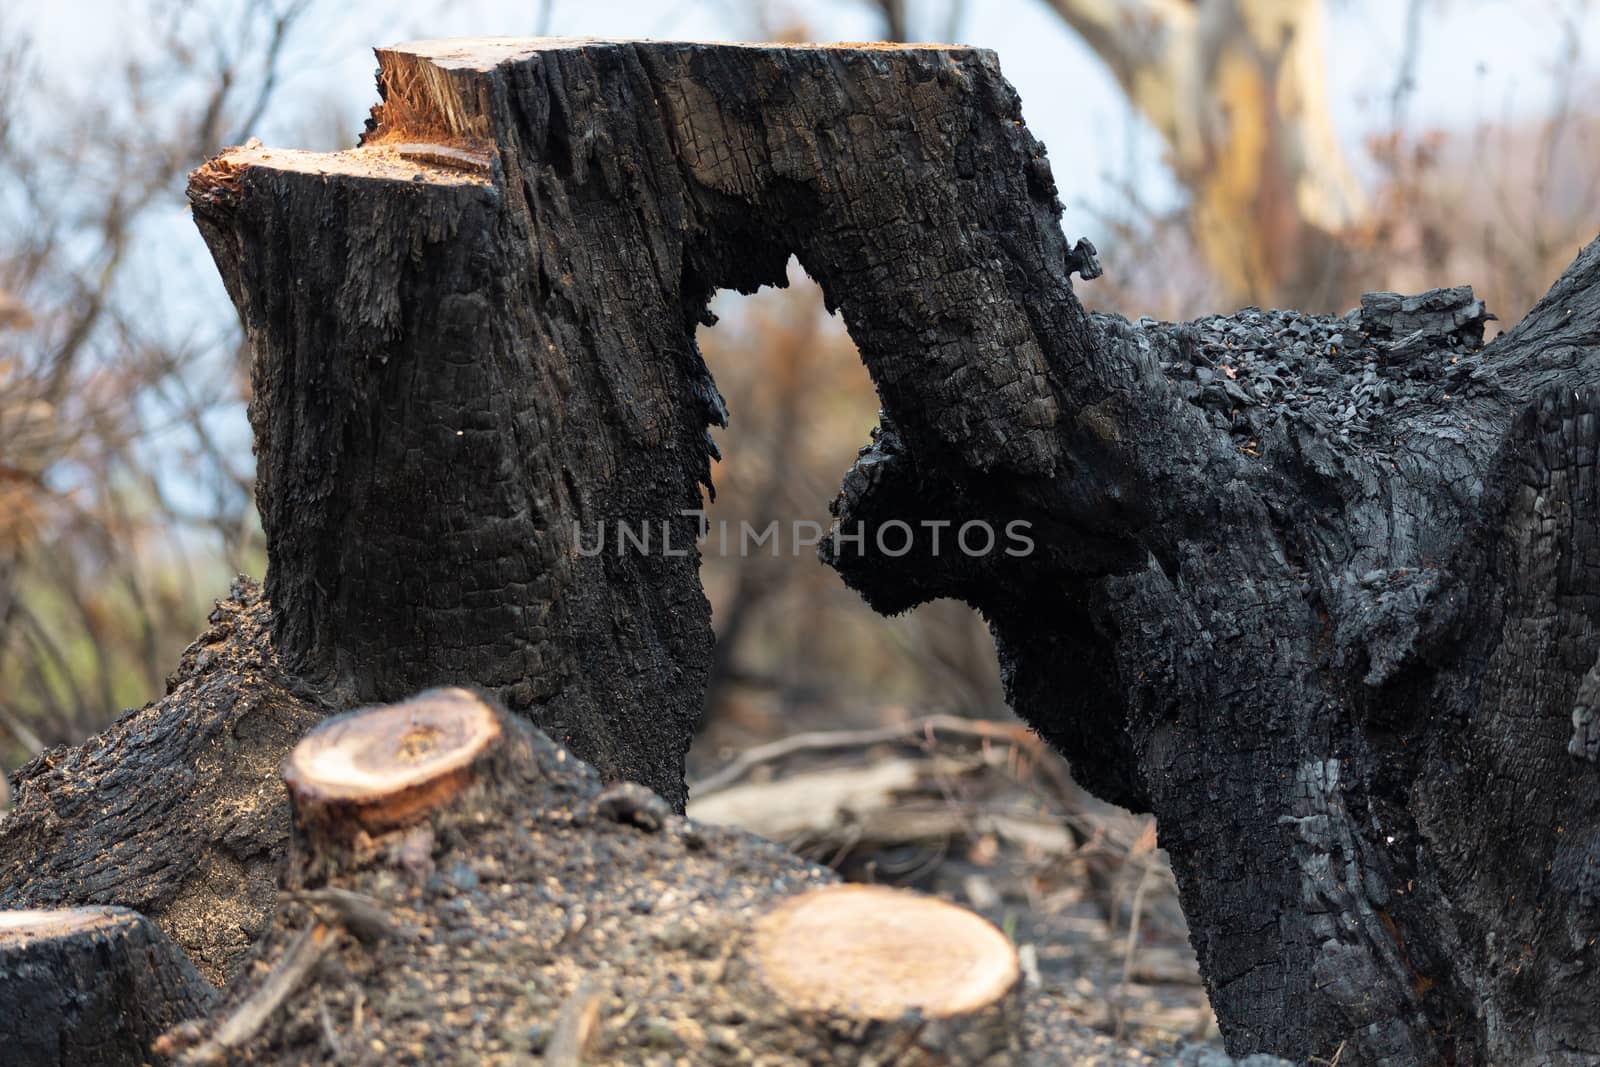 Burnt hollow tree felled after bushfires in Australia by lovleah